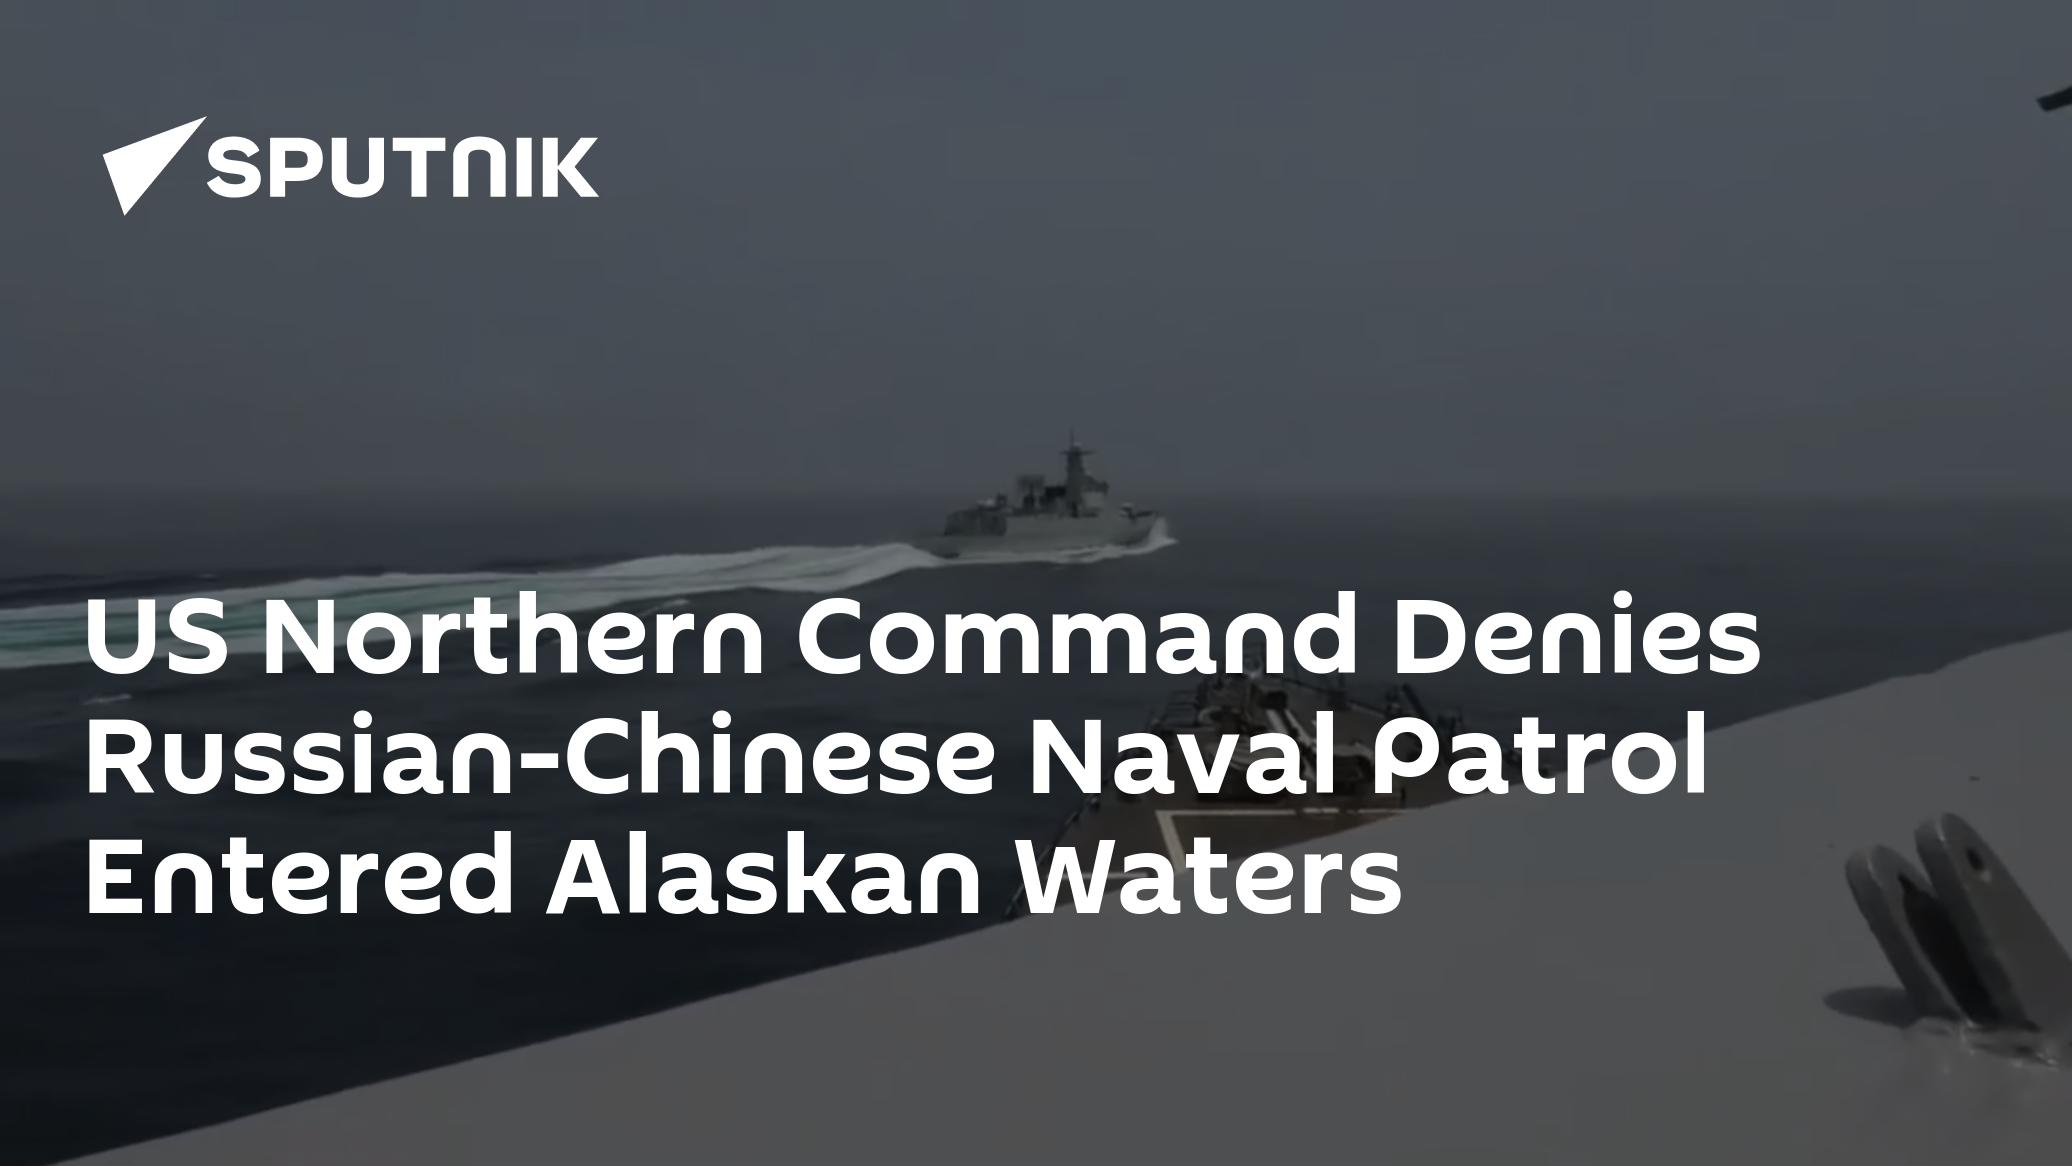 US Northern Command Denies Russian-Chinese Naval Patrol Entered Alaskan Waters